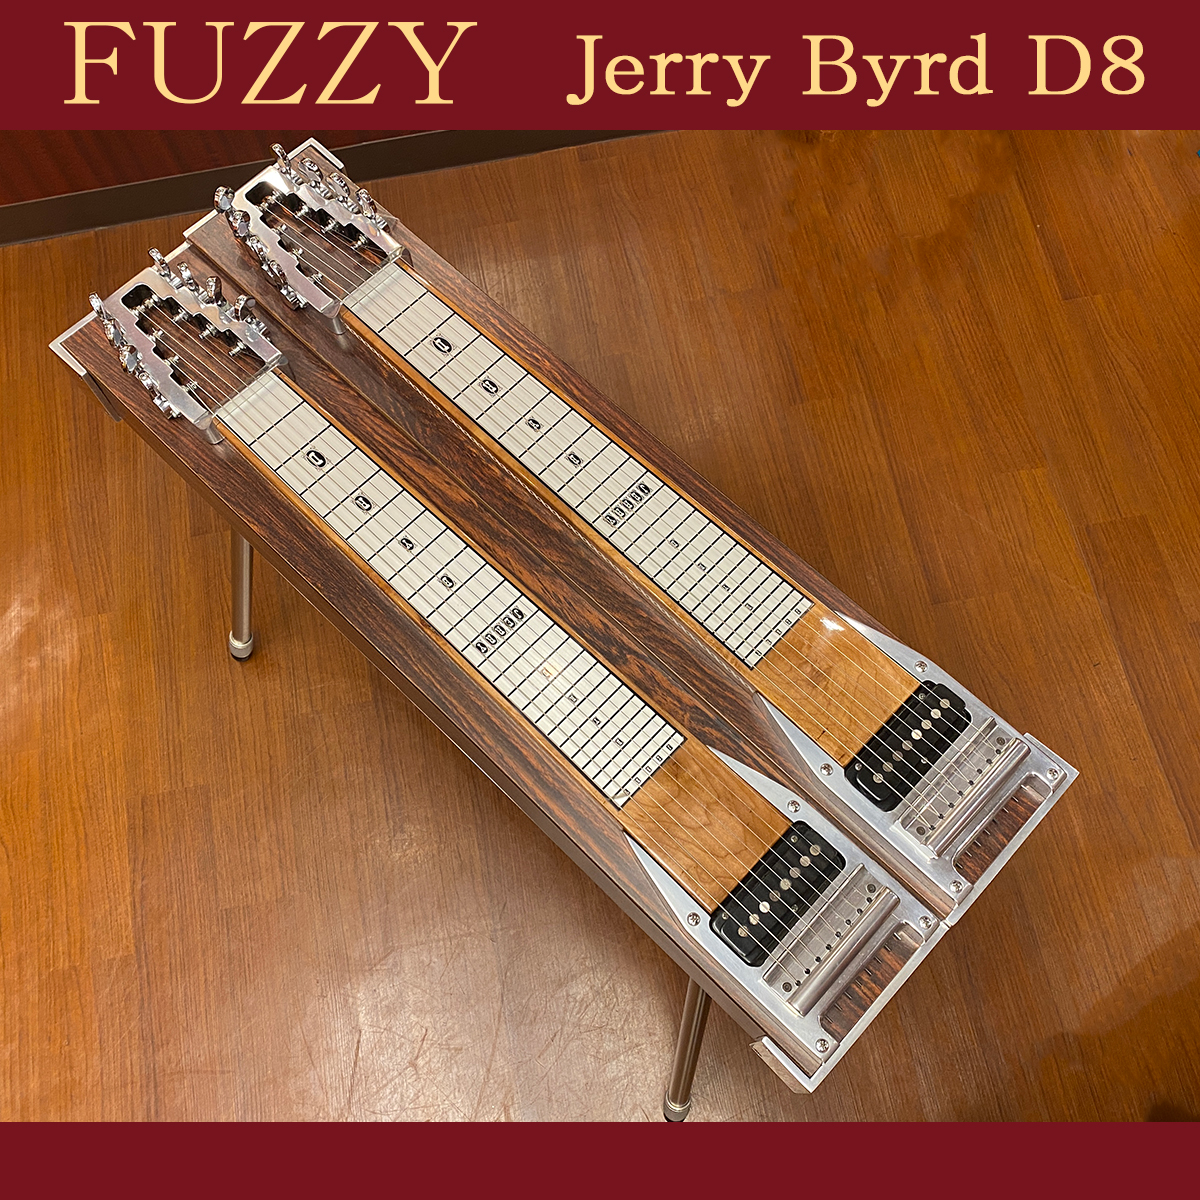 Jerry byrd D8